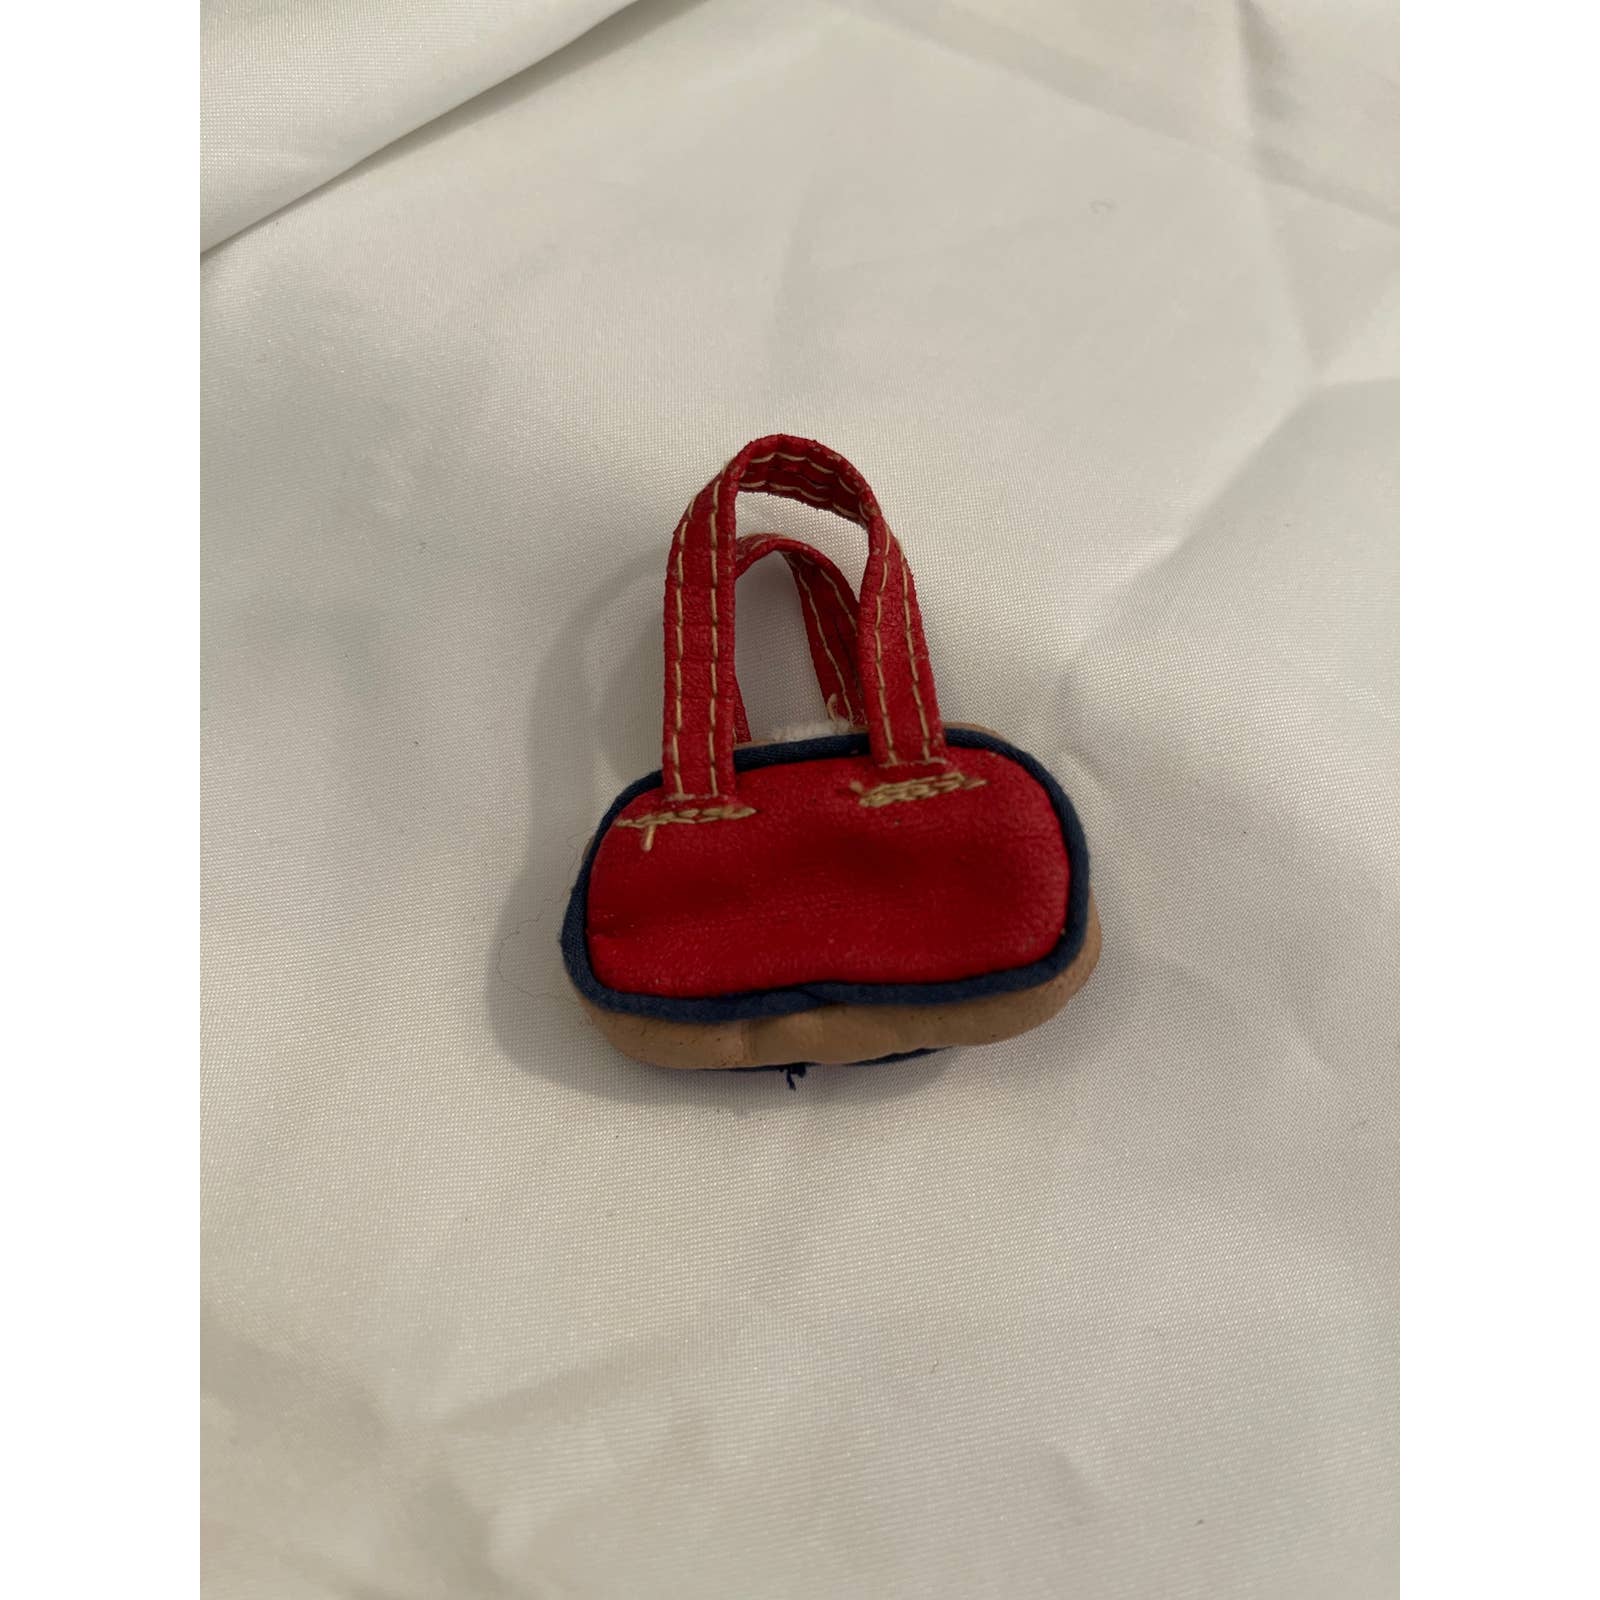 Bratz Doll Purse #29 Angel Tan Red Blue Handbag Tote (Pre-Owned) –  Groovy61crafts